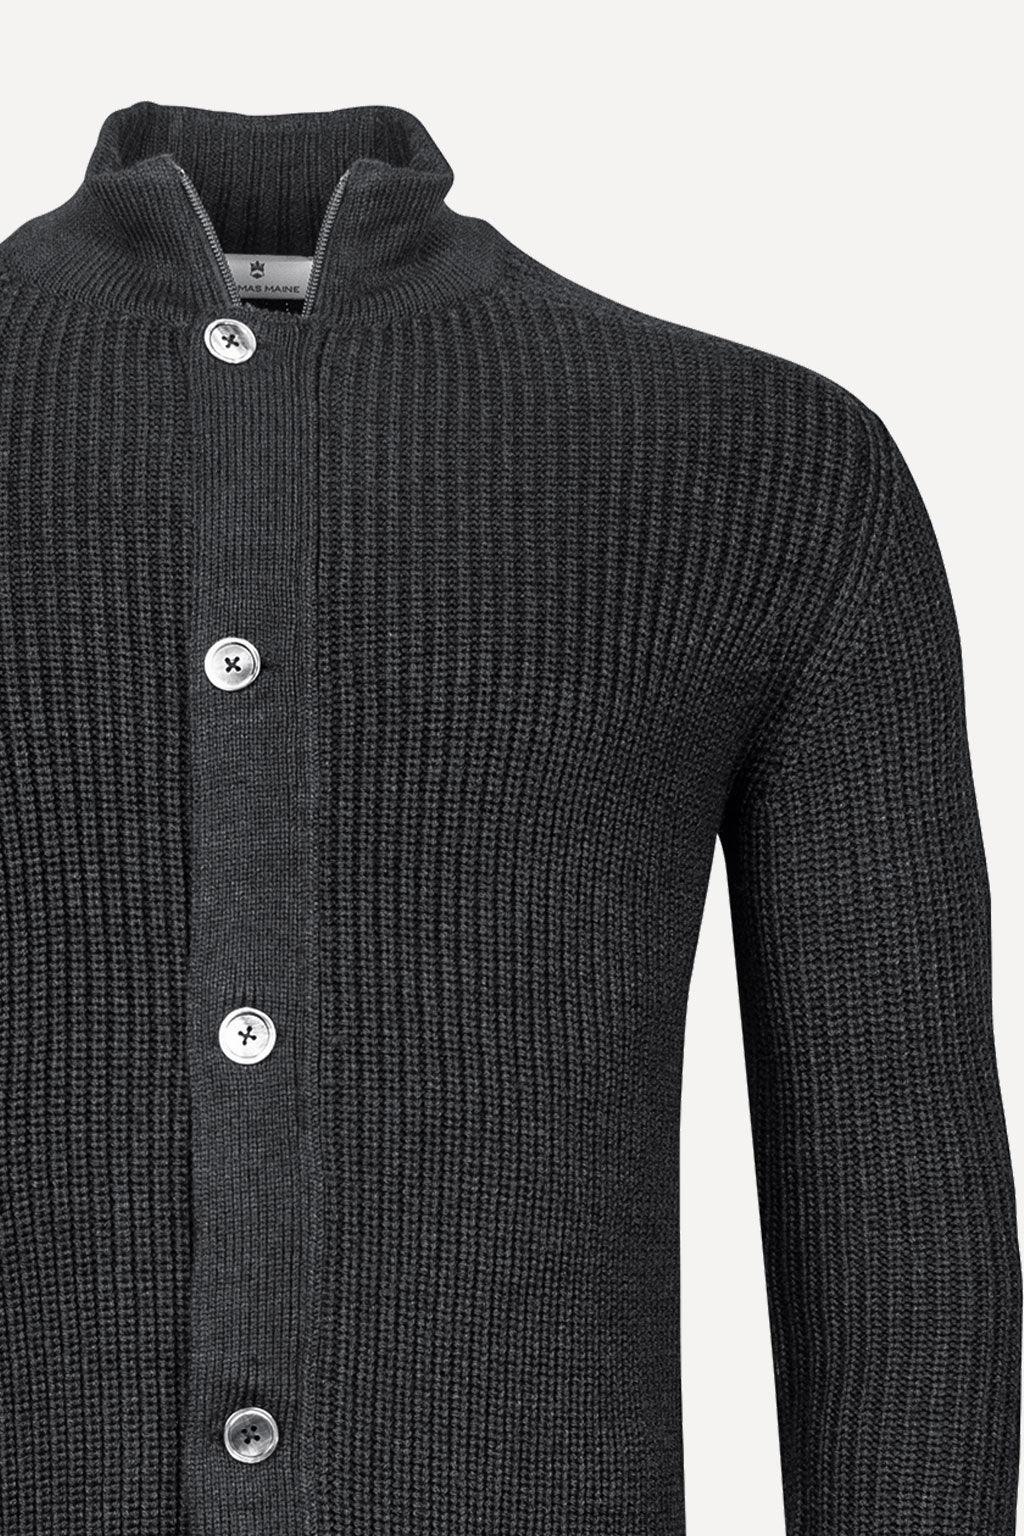 Thomas Maine vest | Big Boss | the menswear concept